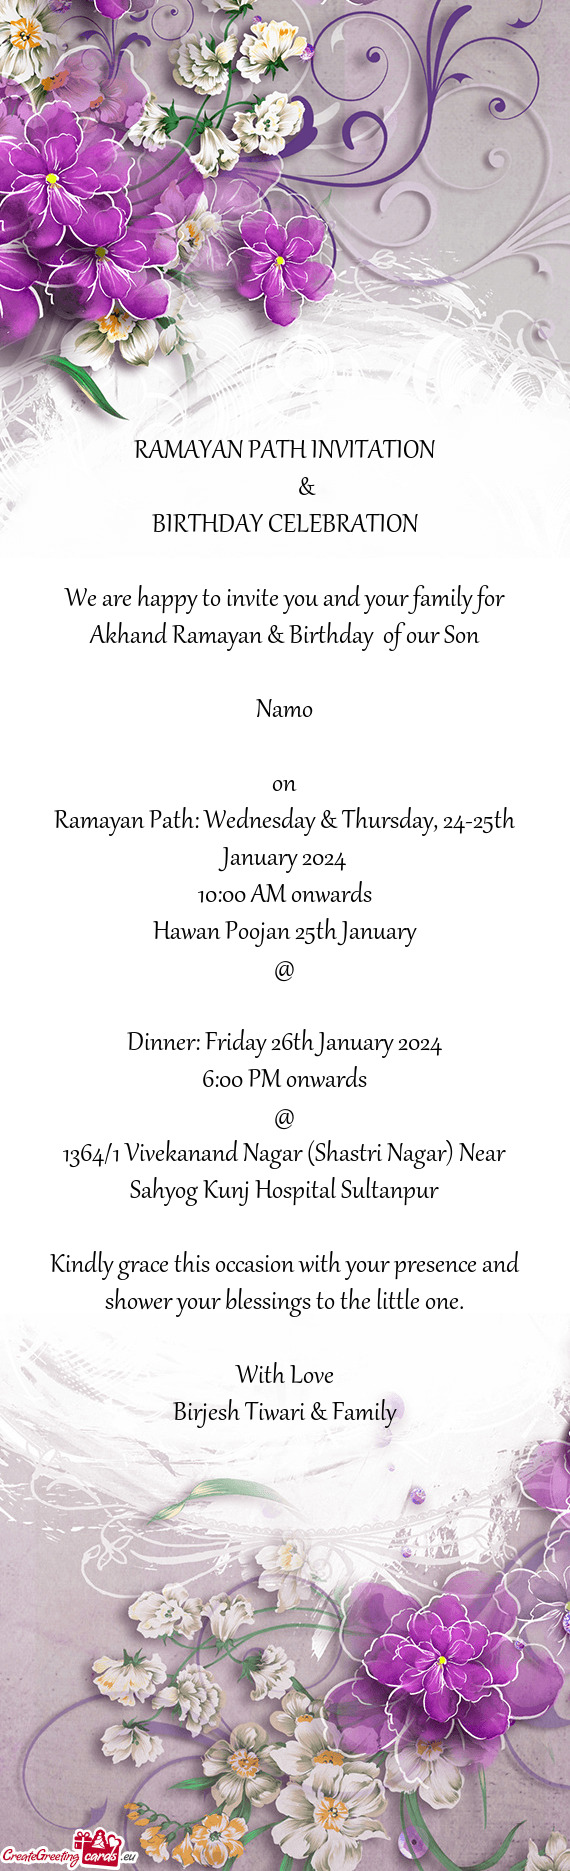 Ramayan Path: Wednesday & Thursday, 24-25th January 2024